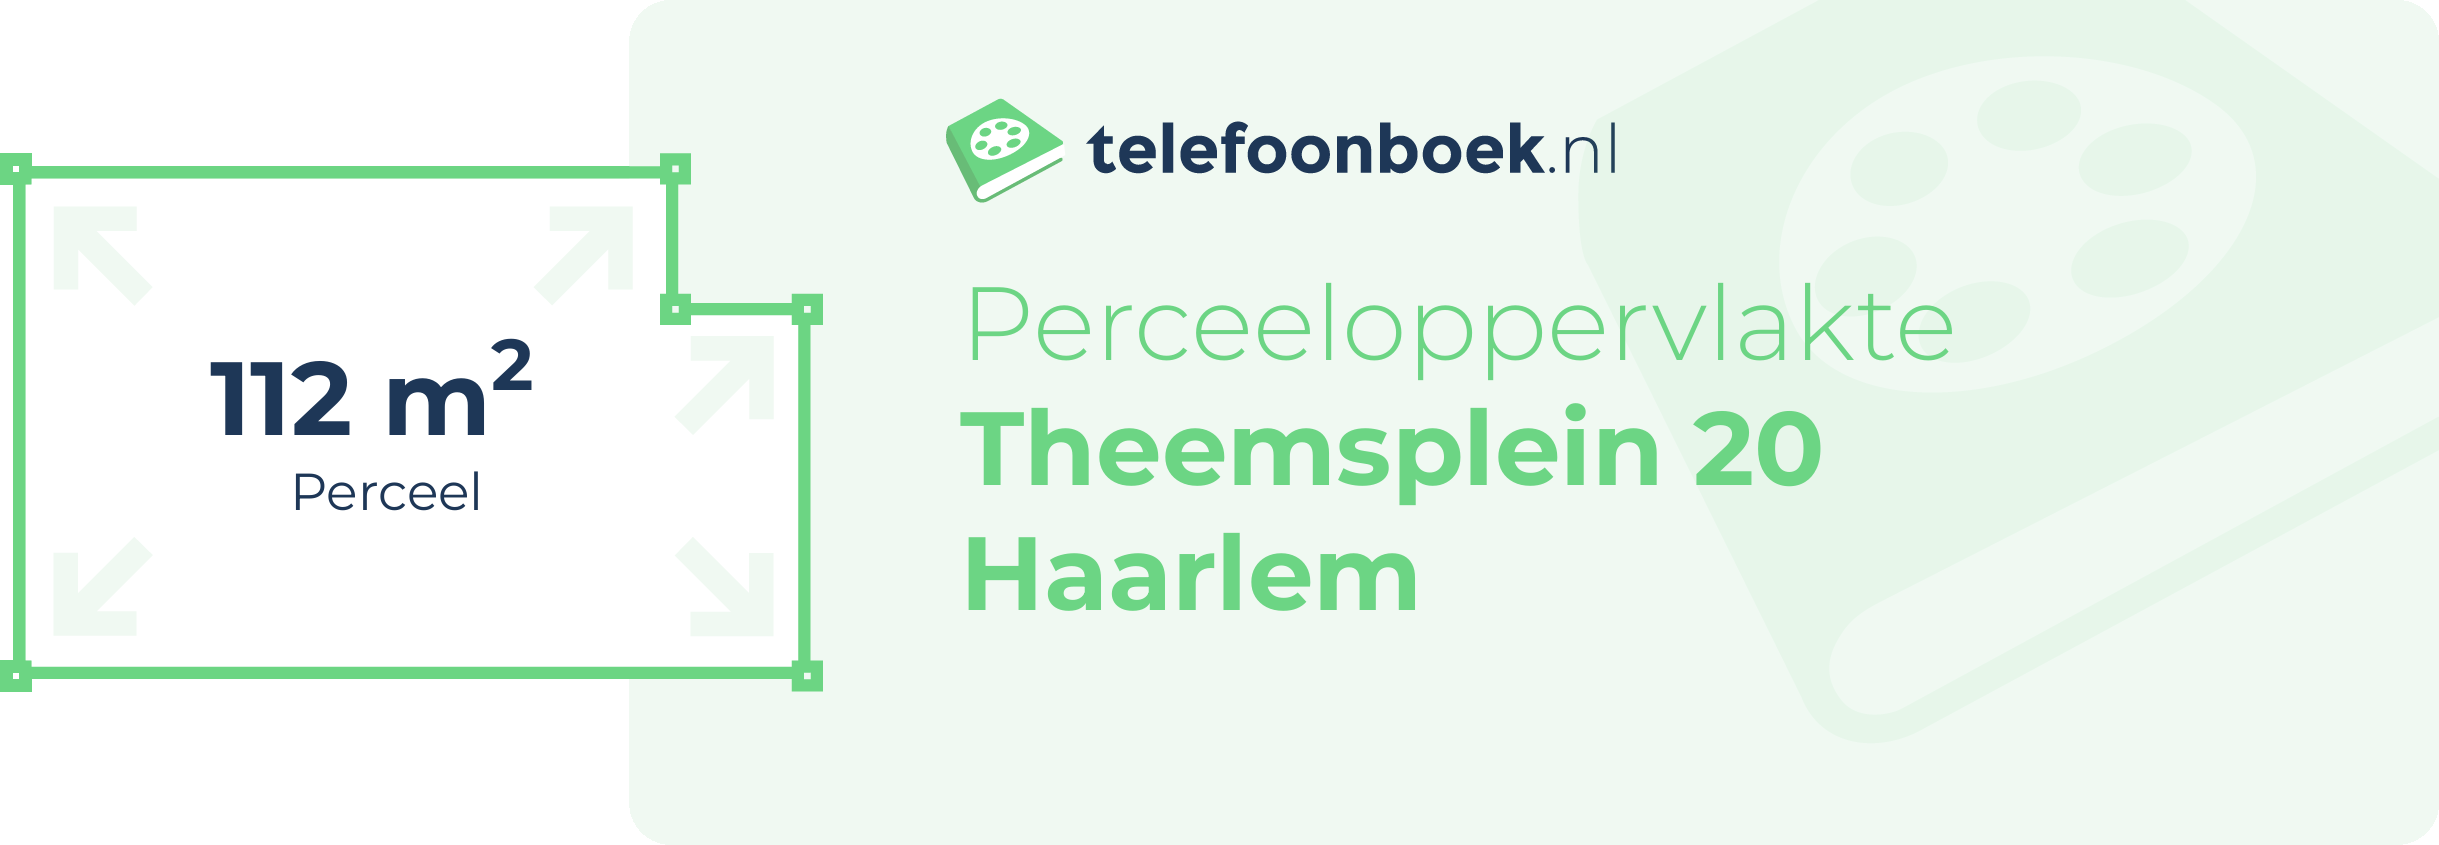 Perceeloppervlakte Theemsplein 20 Haarlem